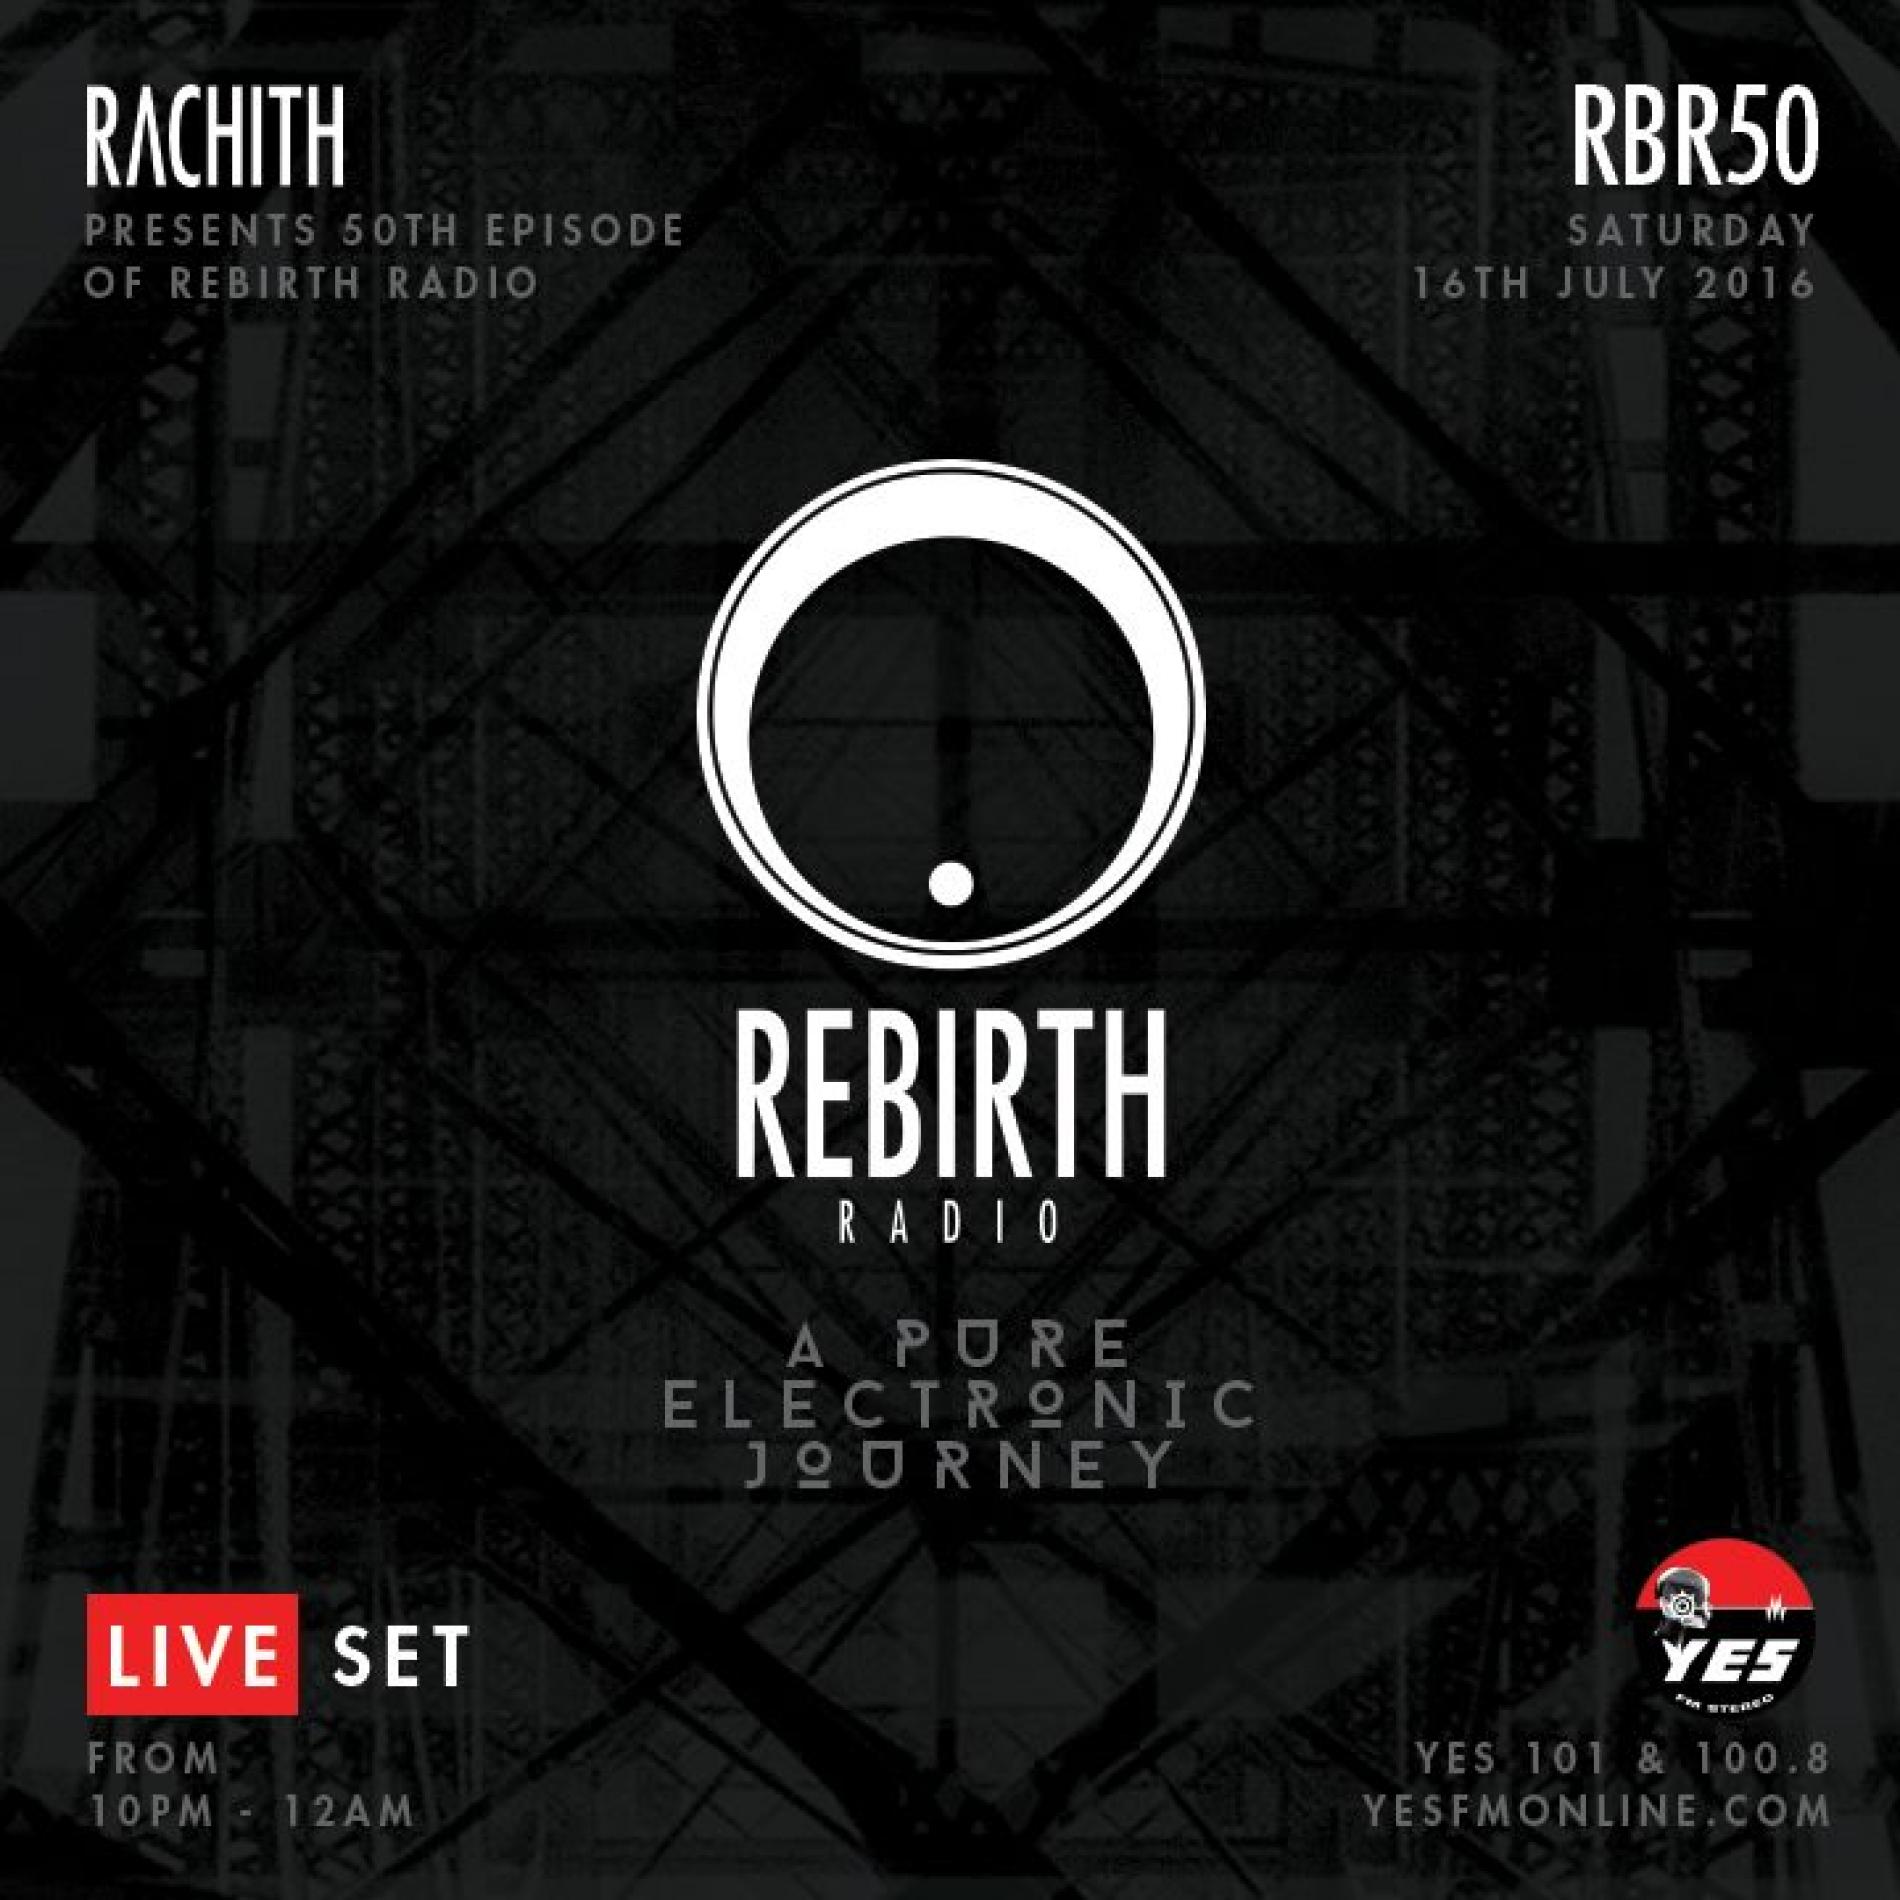 Rachith Presents 50th Episode Of Rebirth Radio